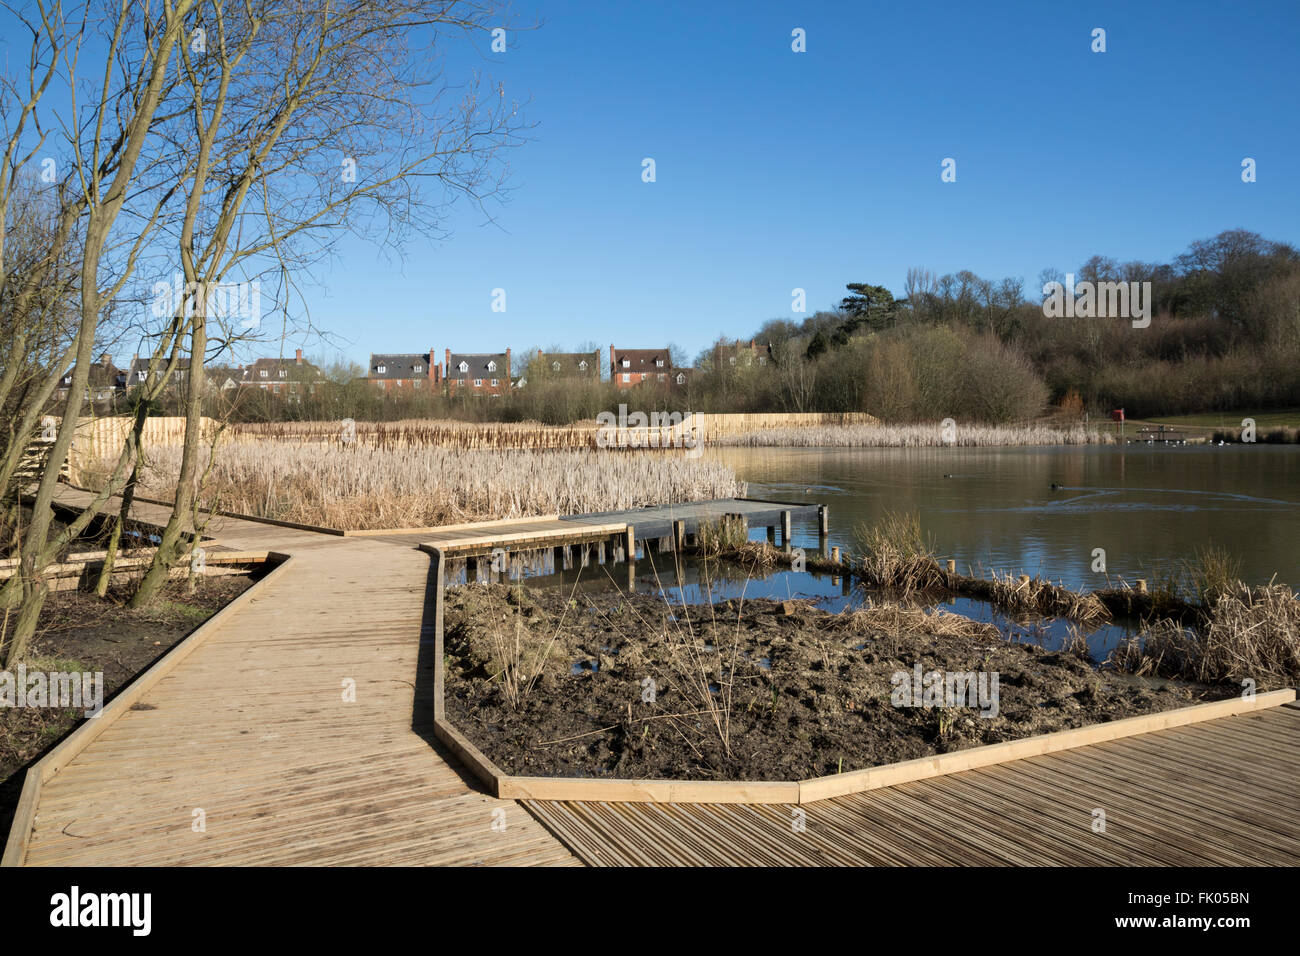 Wetlands habitat in urban wildlife park, with viewing platforms Stock Photo